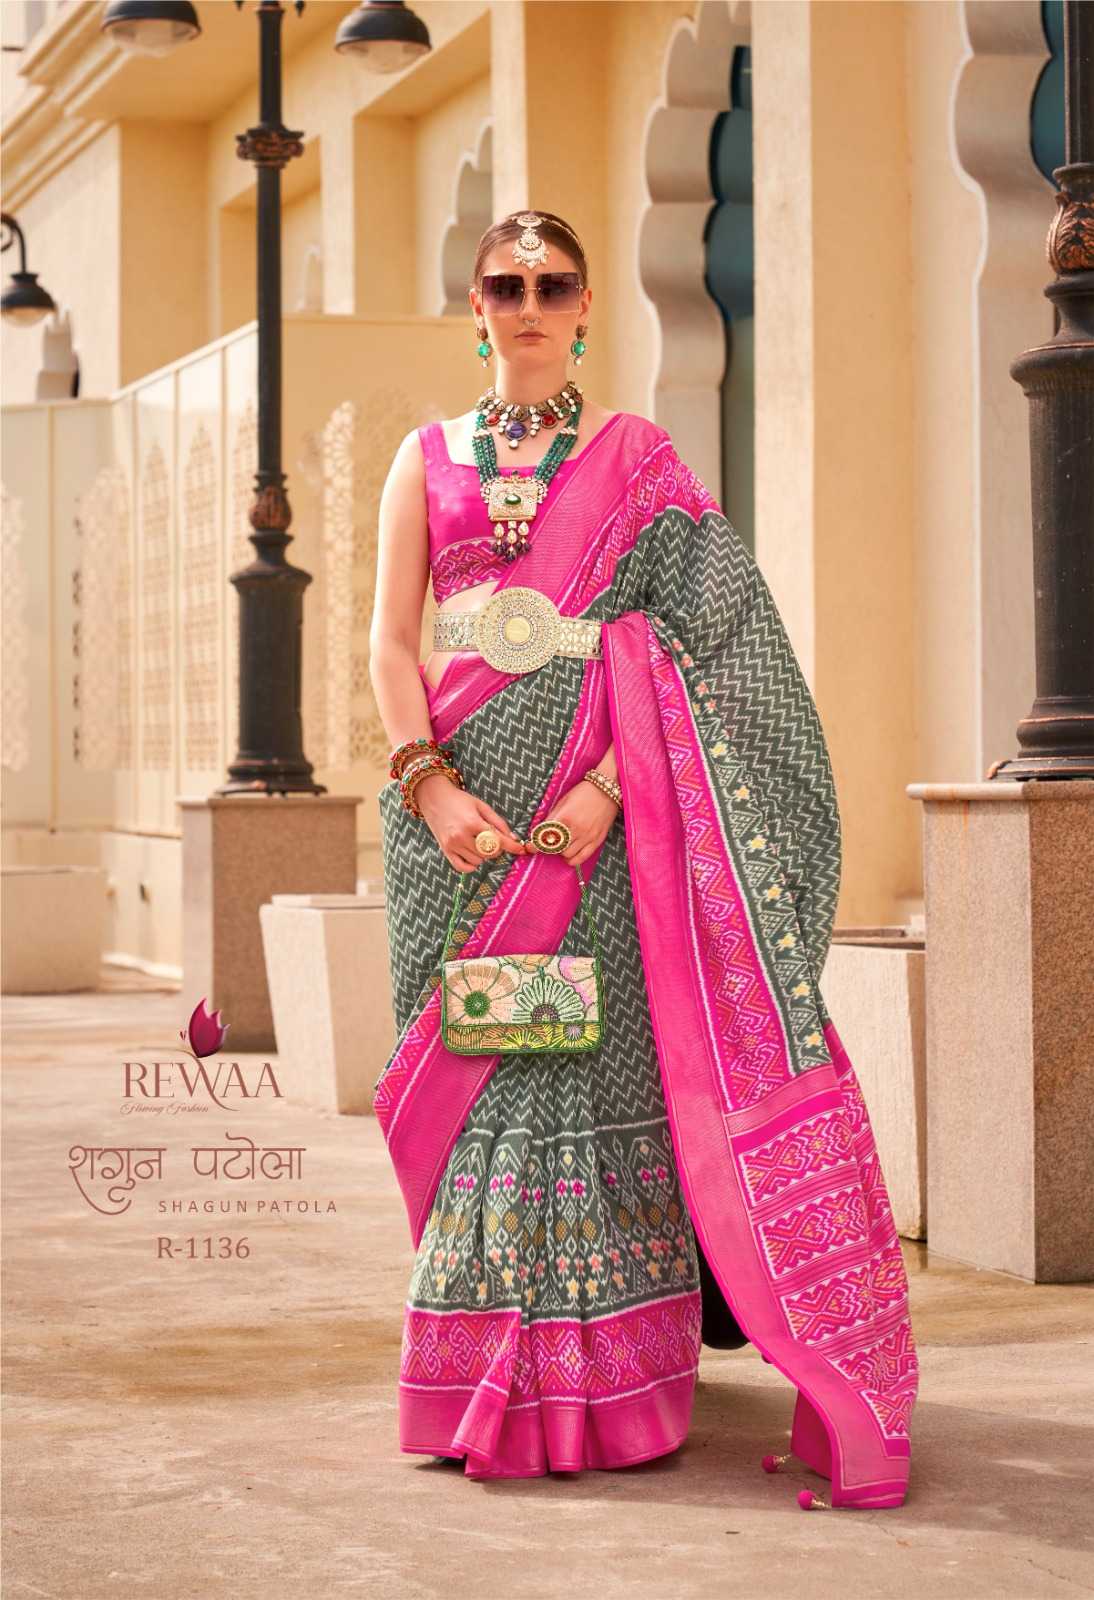 rewaa shagun patola 1132-1143 traditional wear elegant silk sarees online trader